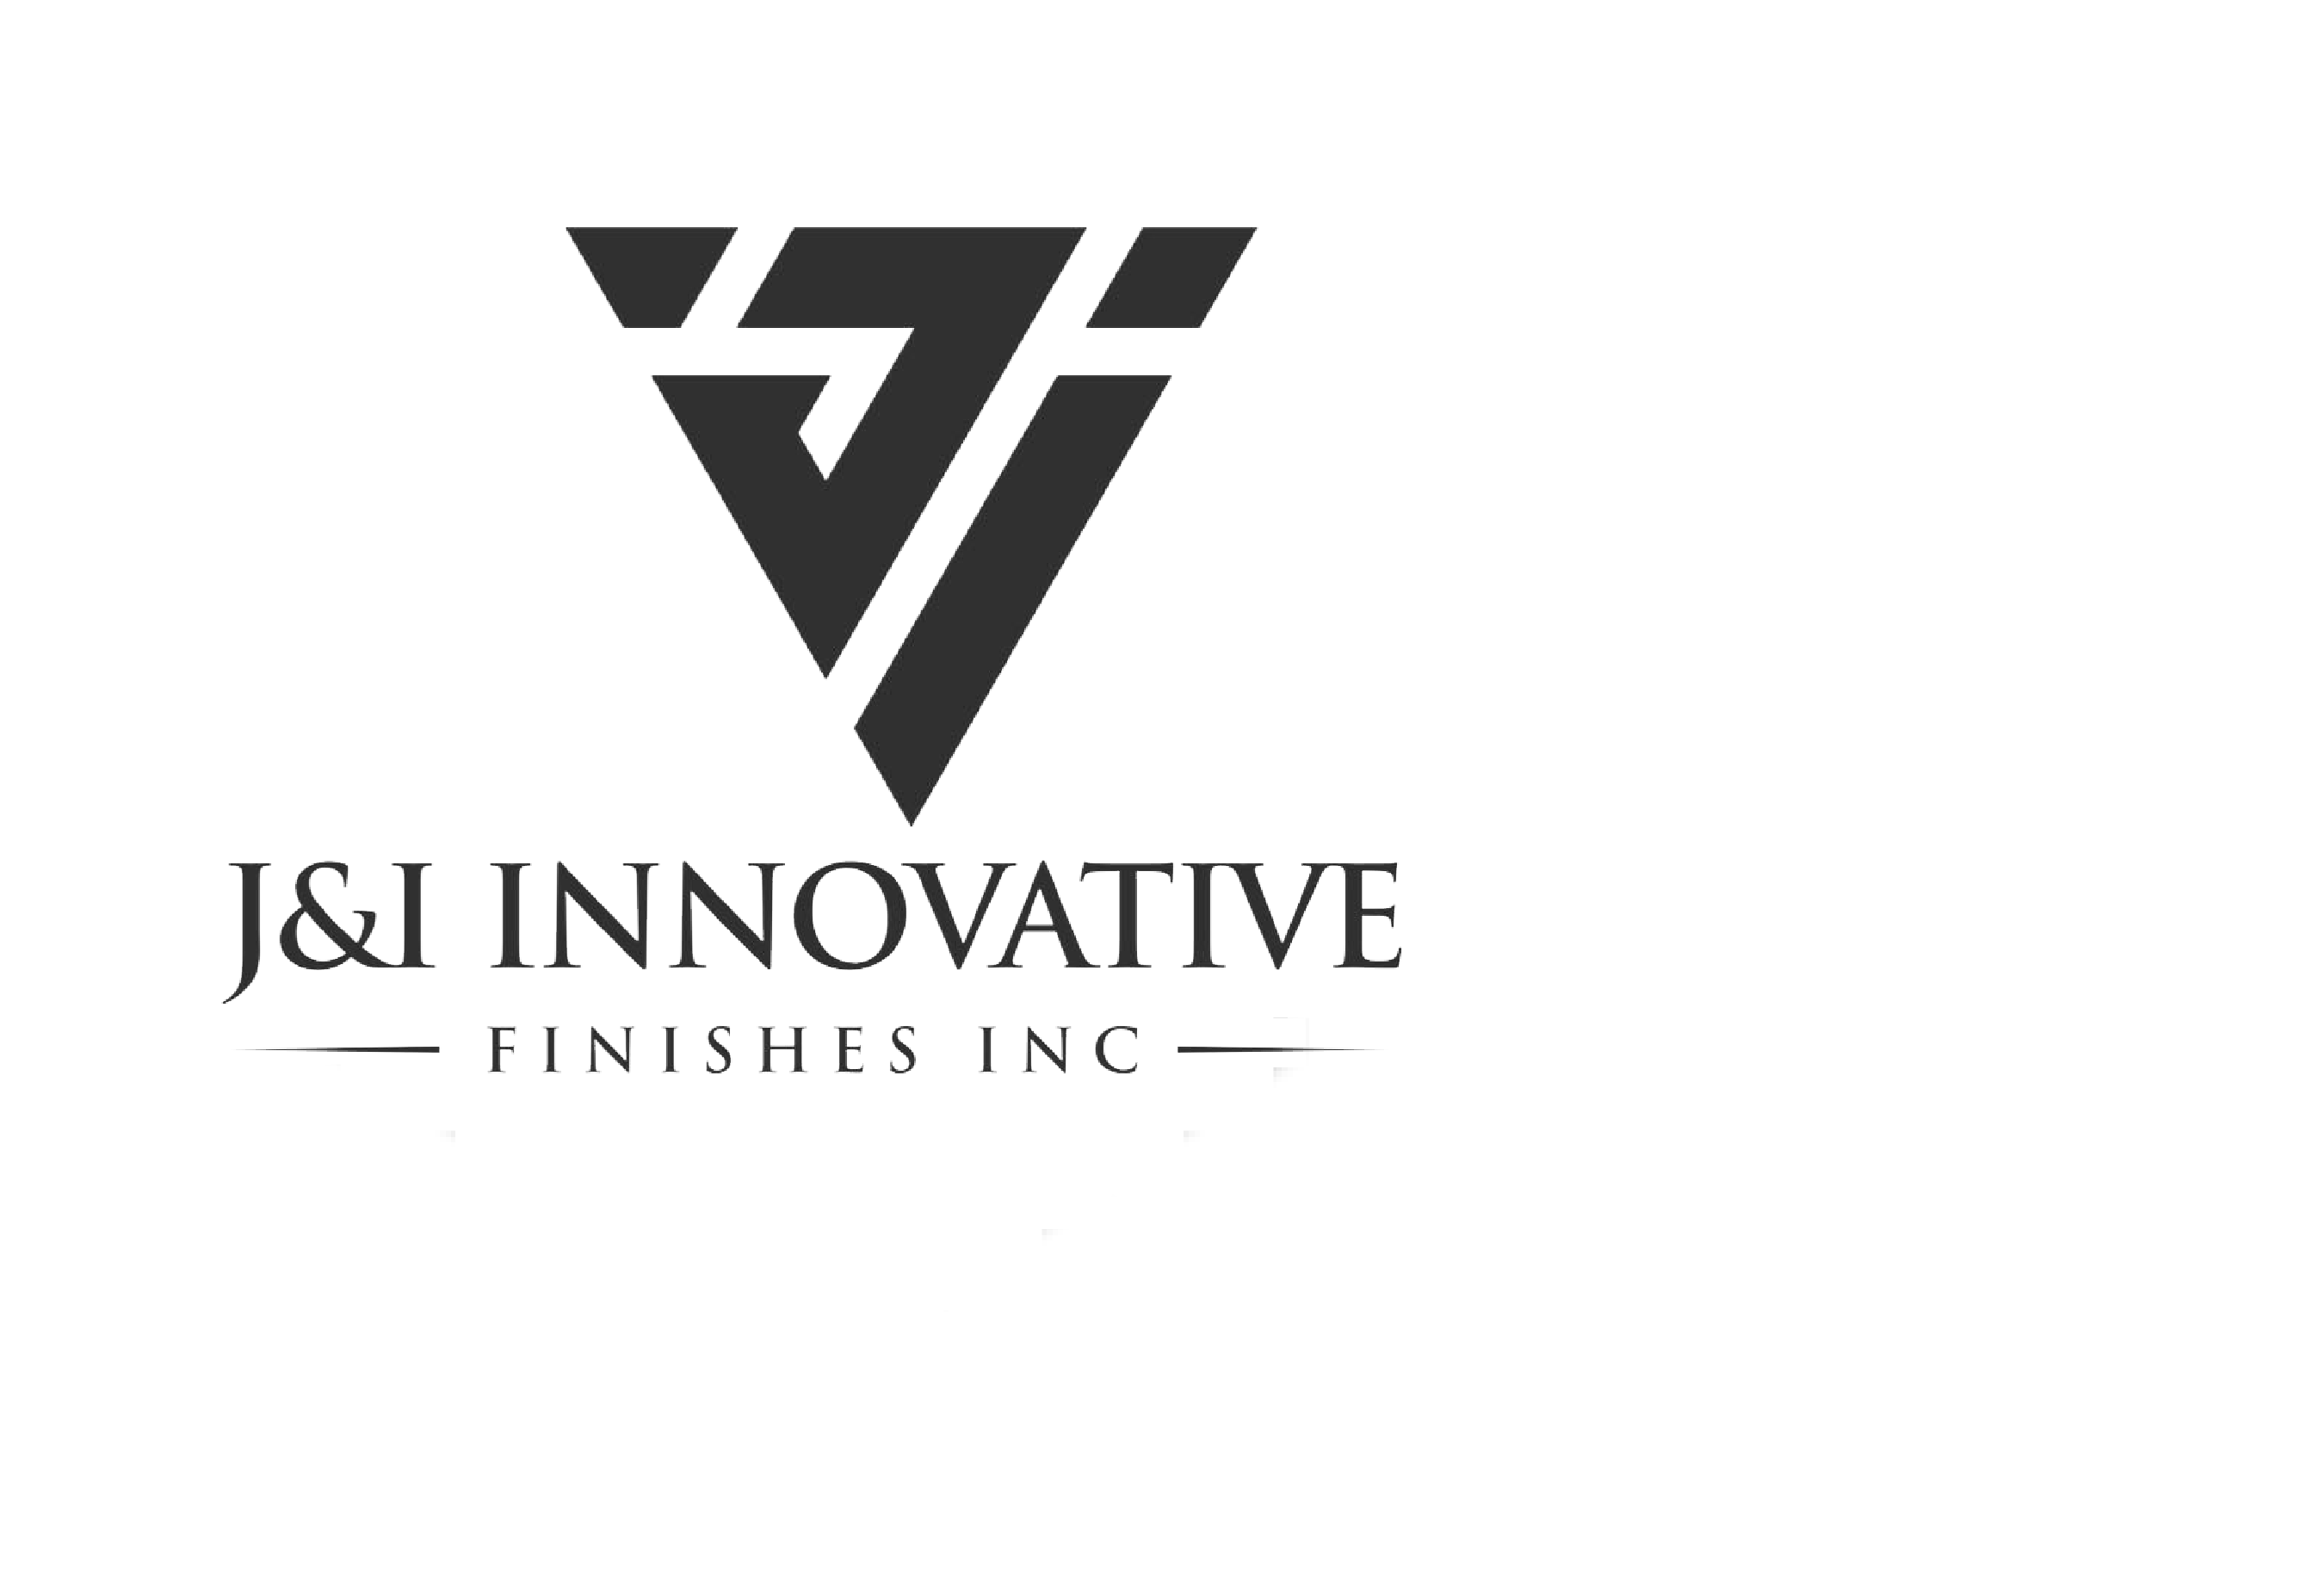 J&I Innovative Finishes Inc